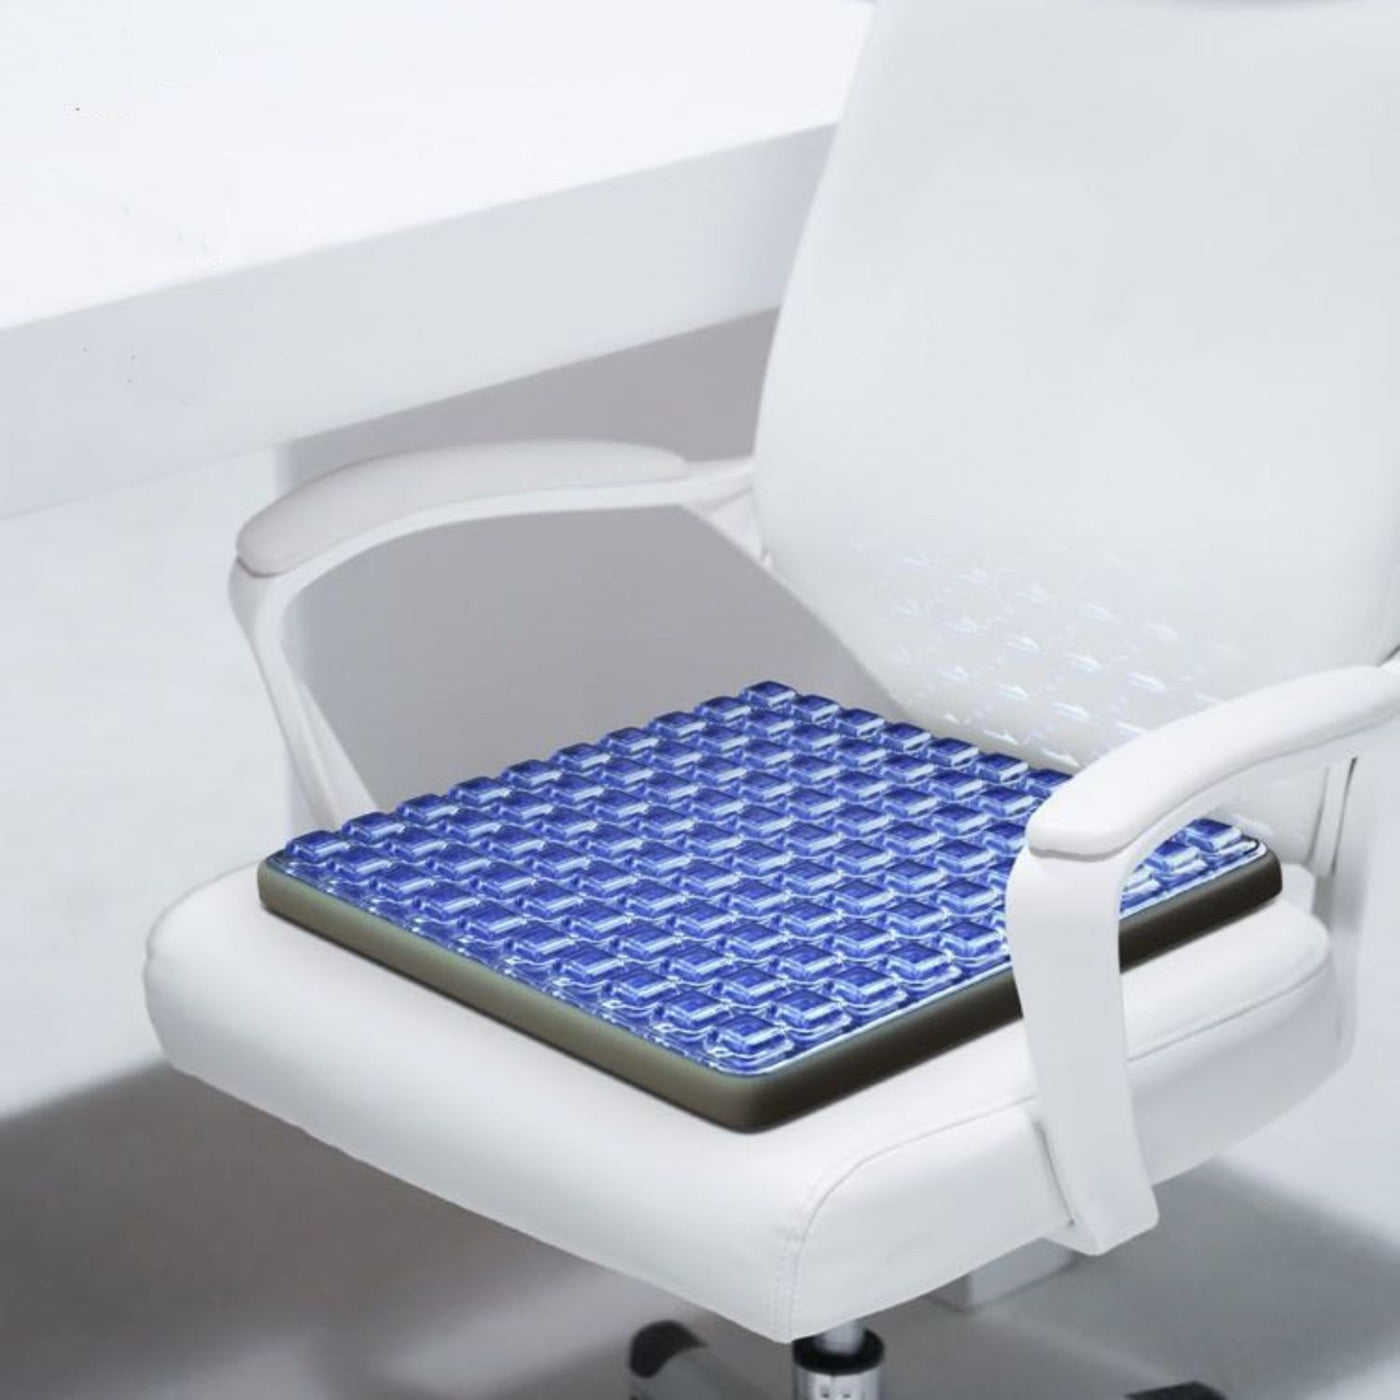 10 Pack Seat Cushions Gel Memory Foam for Back-Brown | Costway